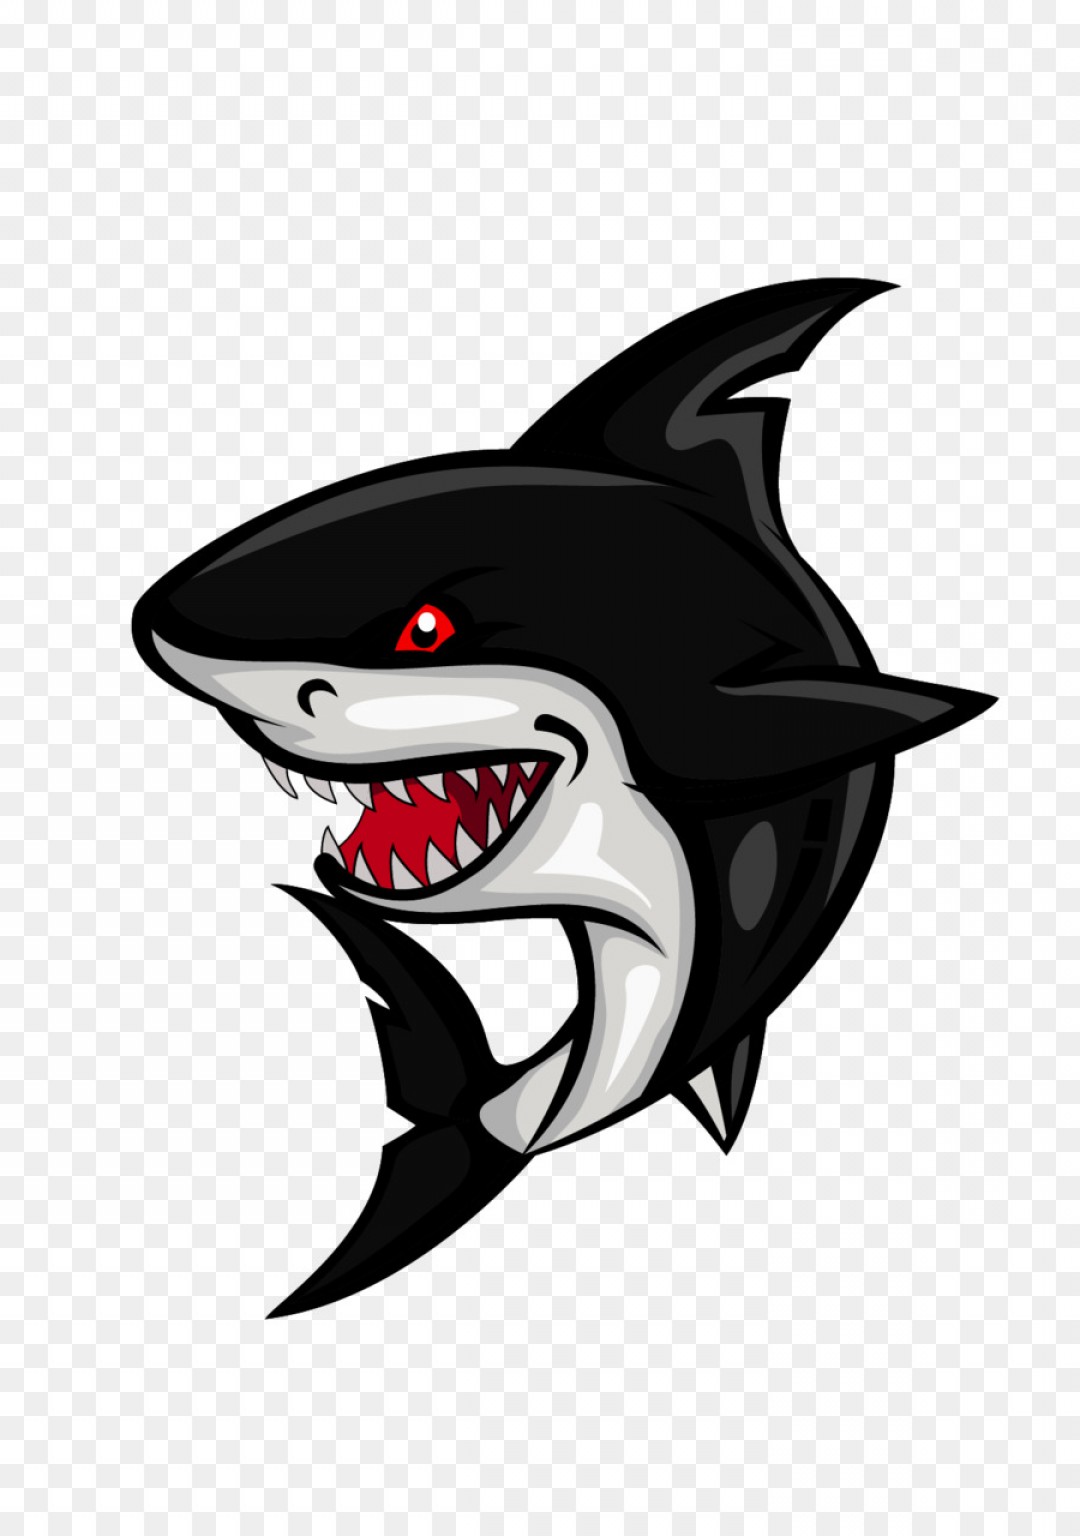 Download Free png Png Shark Cartoon Royalty Free Clip Art.